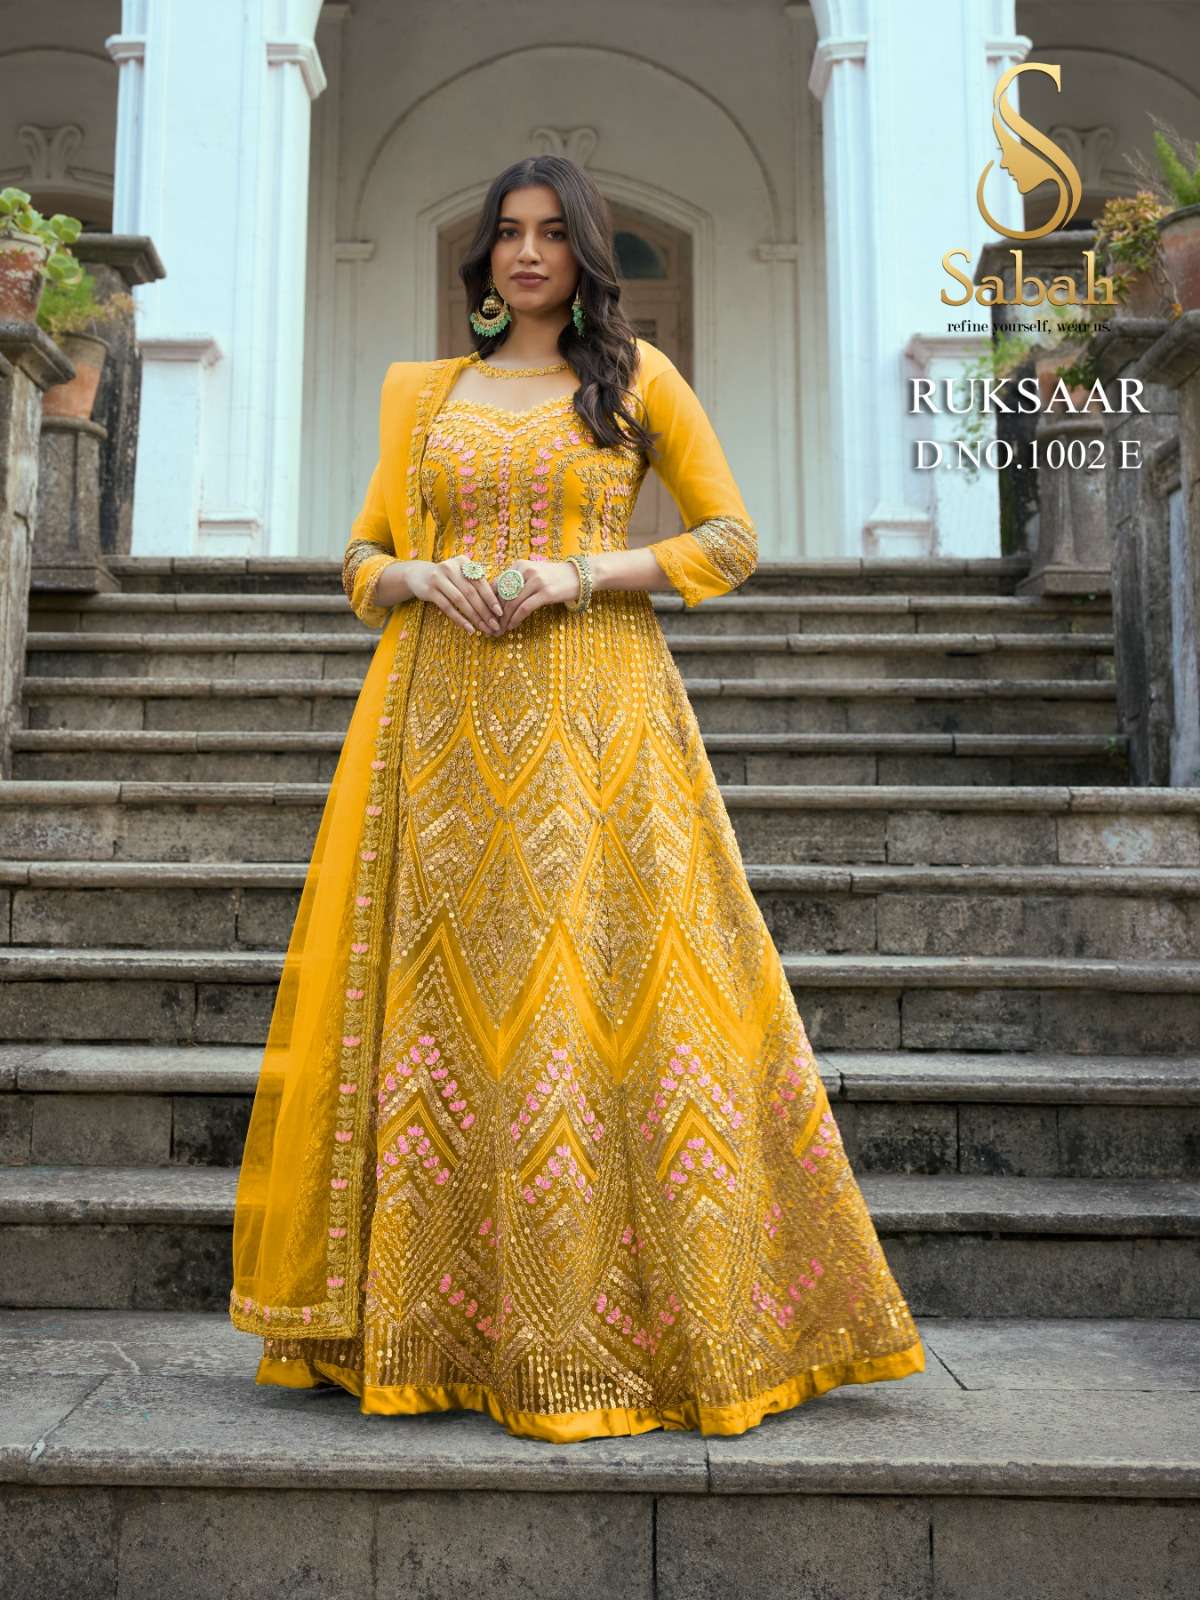 Sabah Ruksaar 1002 Color Plus Exclusive Designer Gown Collection at Wholesaler in Surat